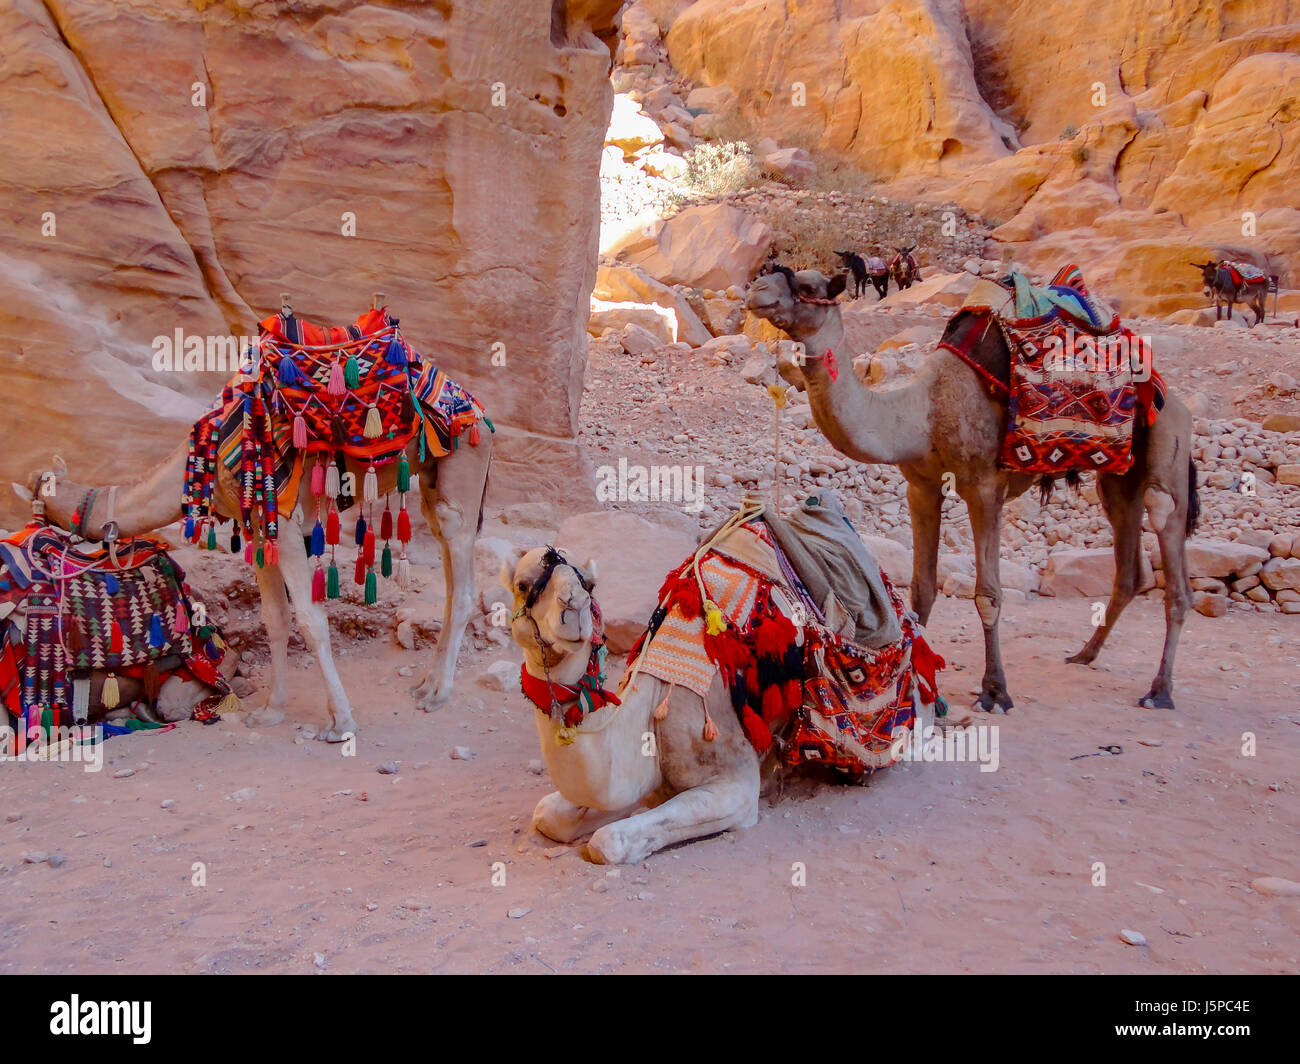 Patricia pics downloaded Dec 2012 Desert camel in Jordan Stock Photo